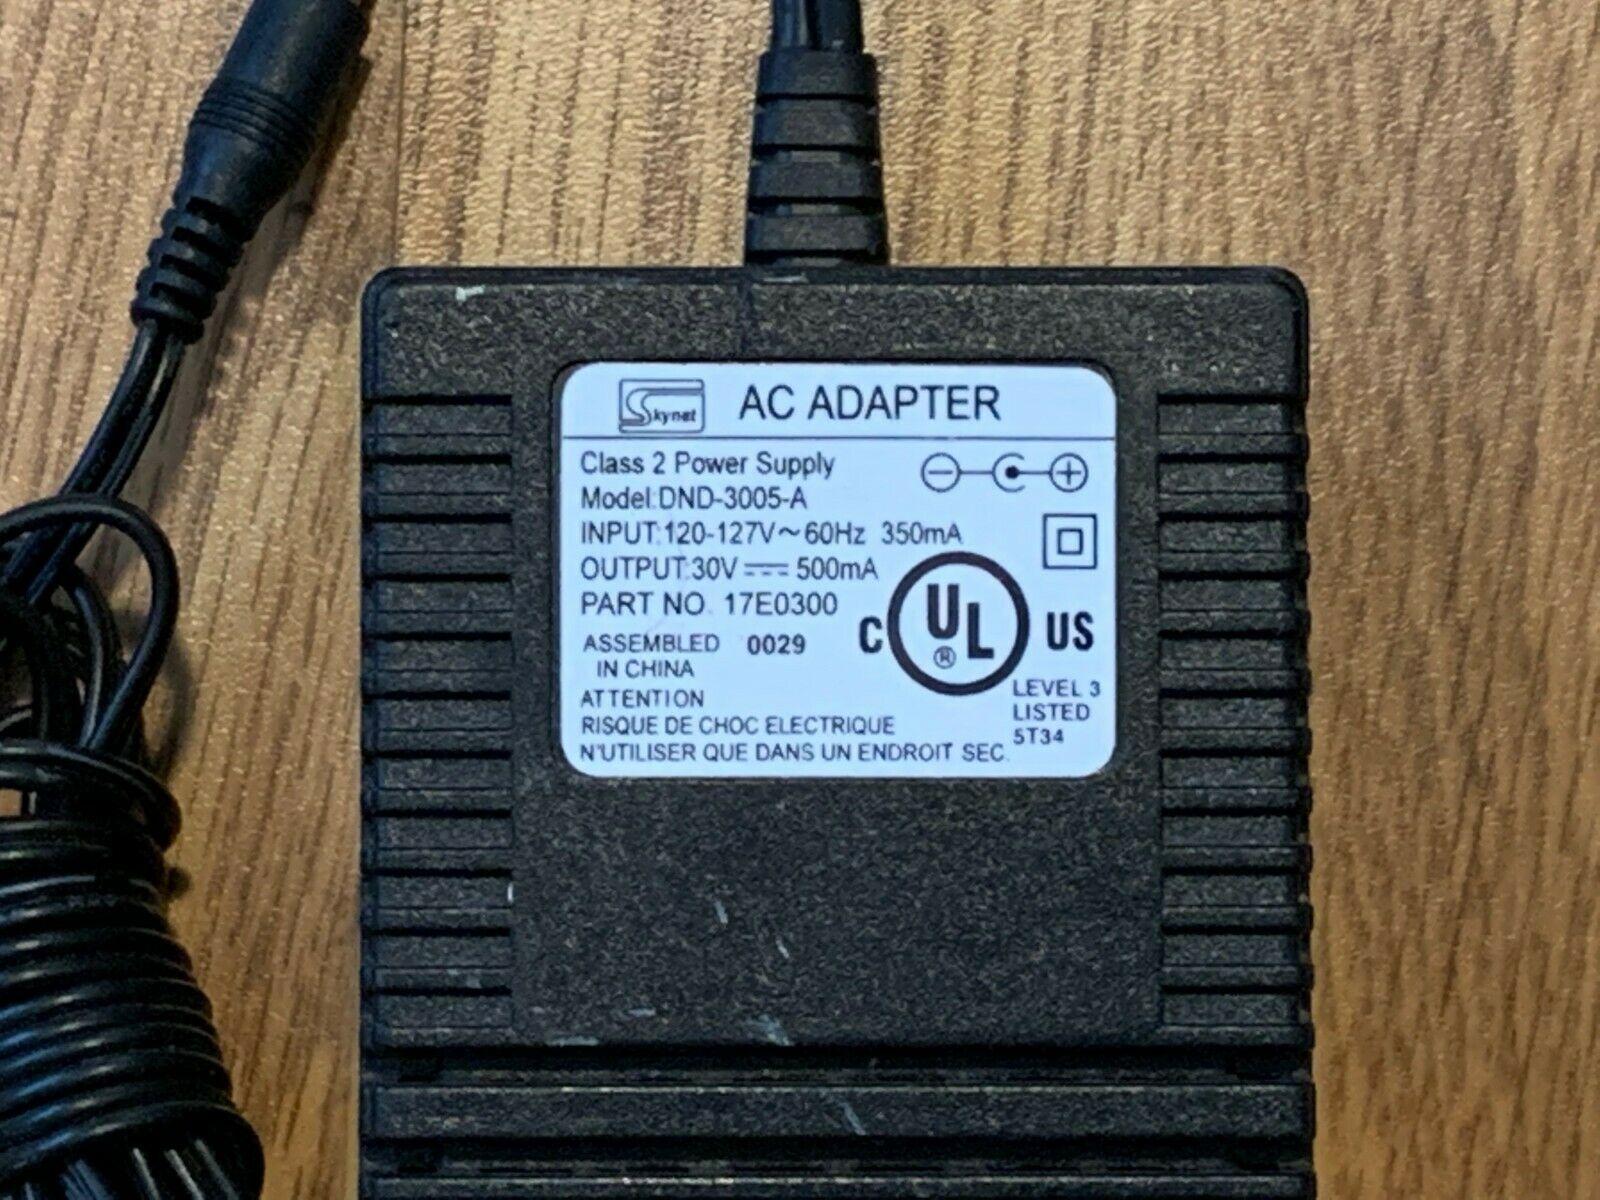 Skynet AC Adapter Class 2 Power Supply DND-3005-A 17E0300 Output: 30V 500mA Type: AC/AC Adapter M